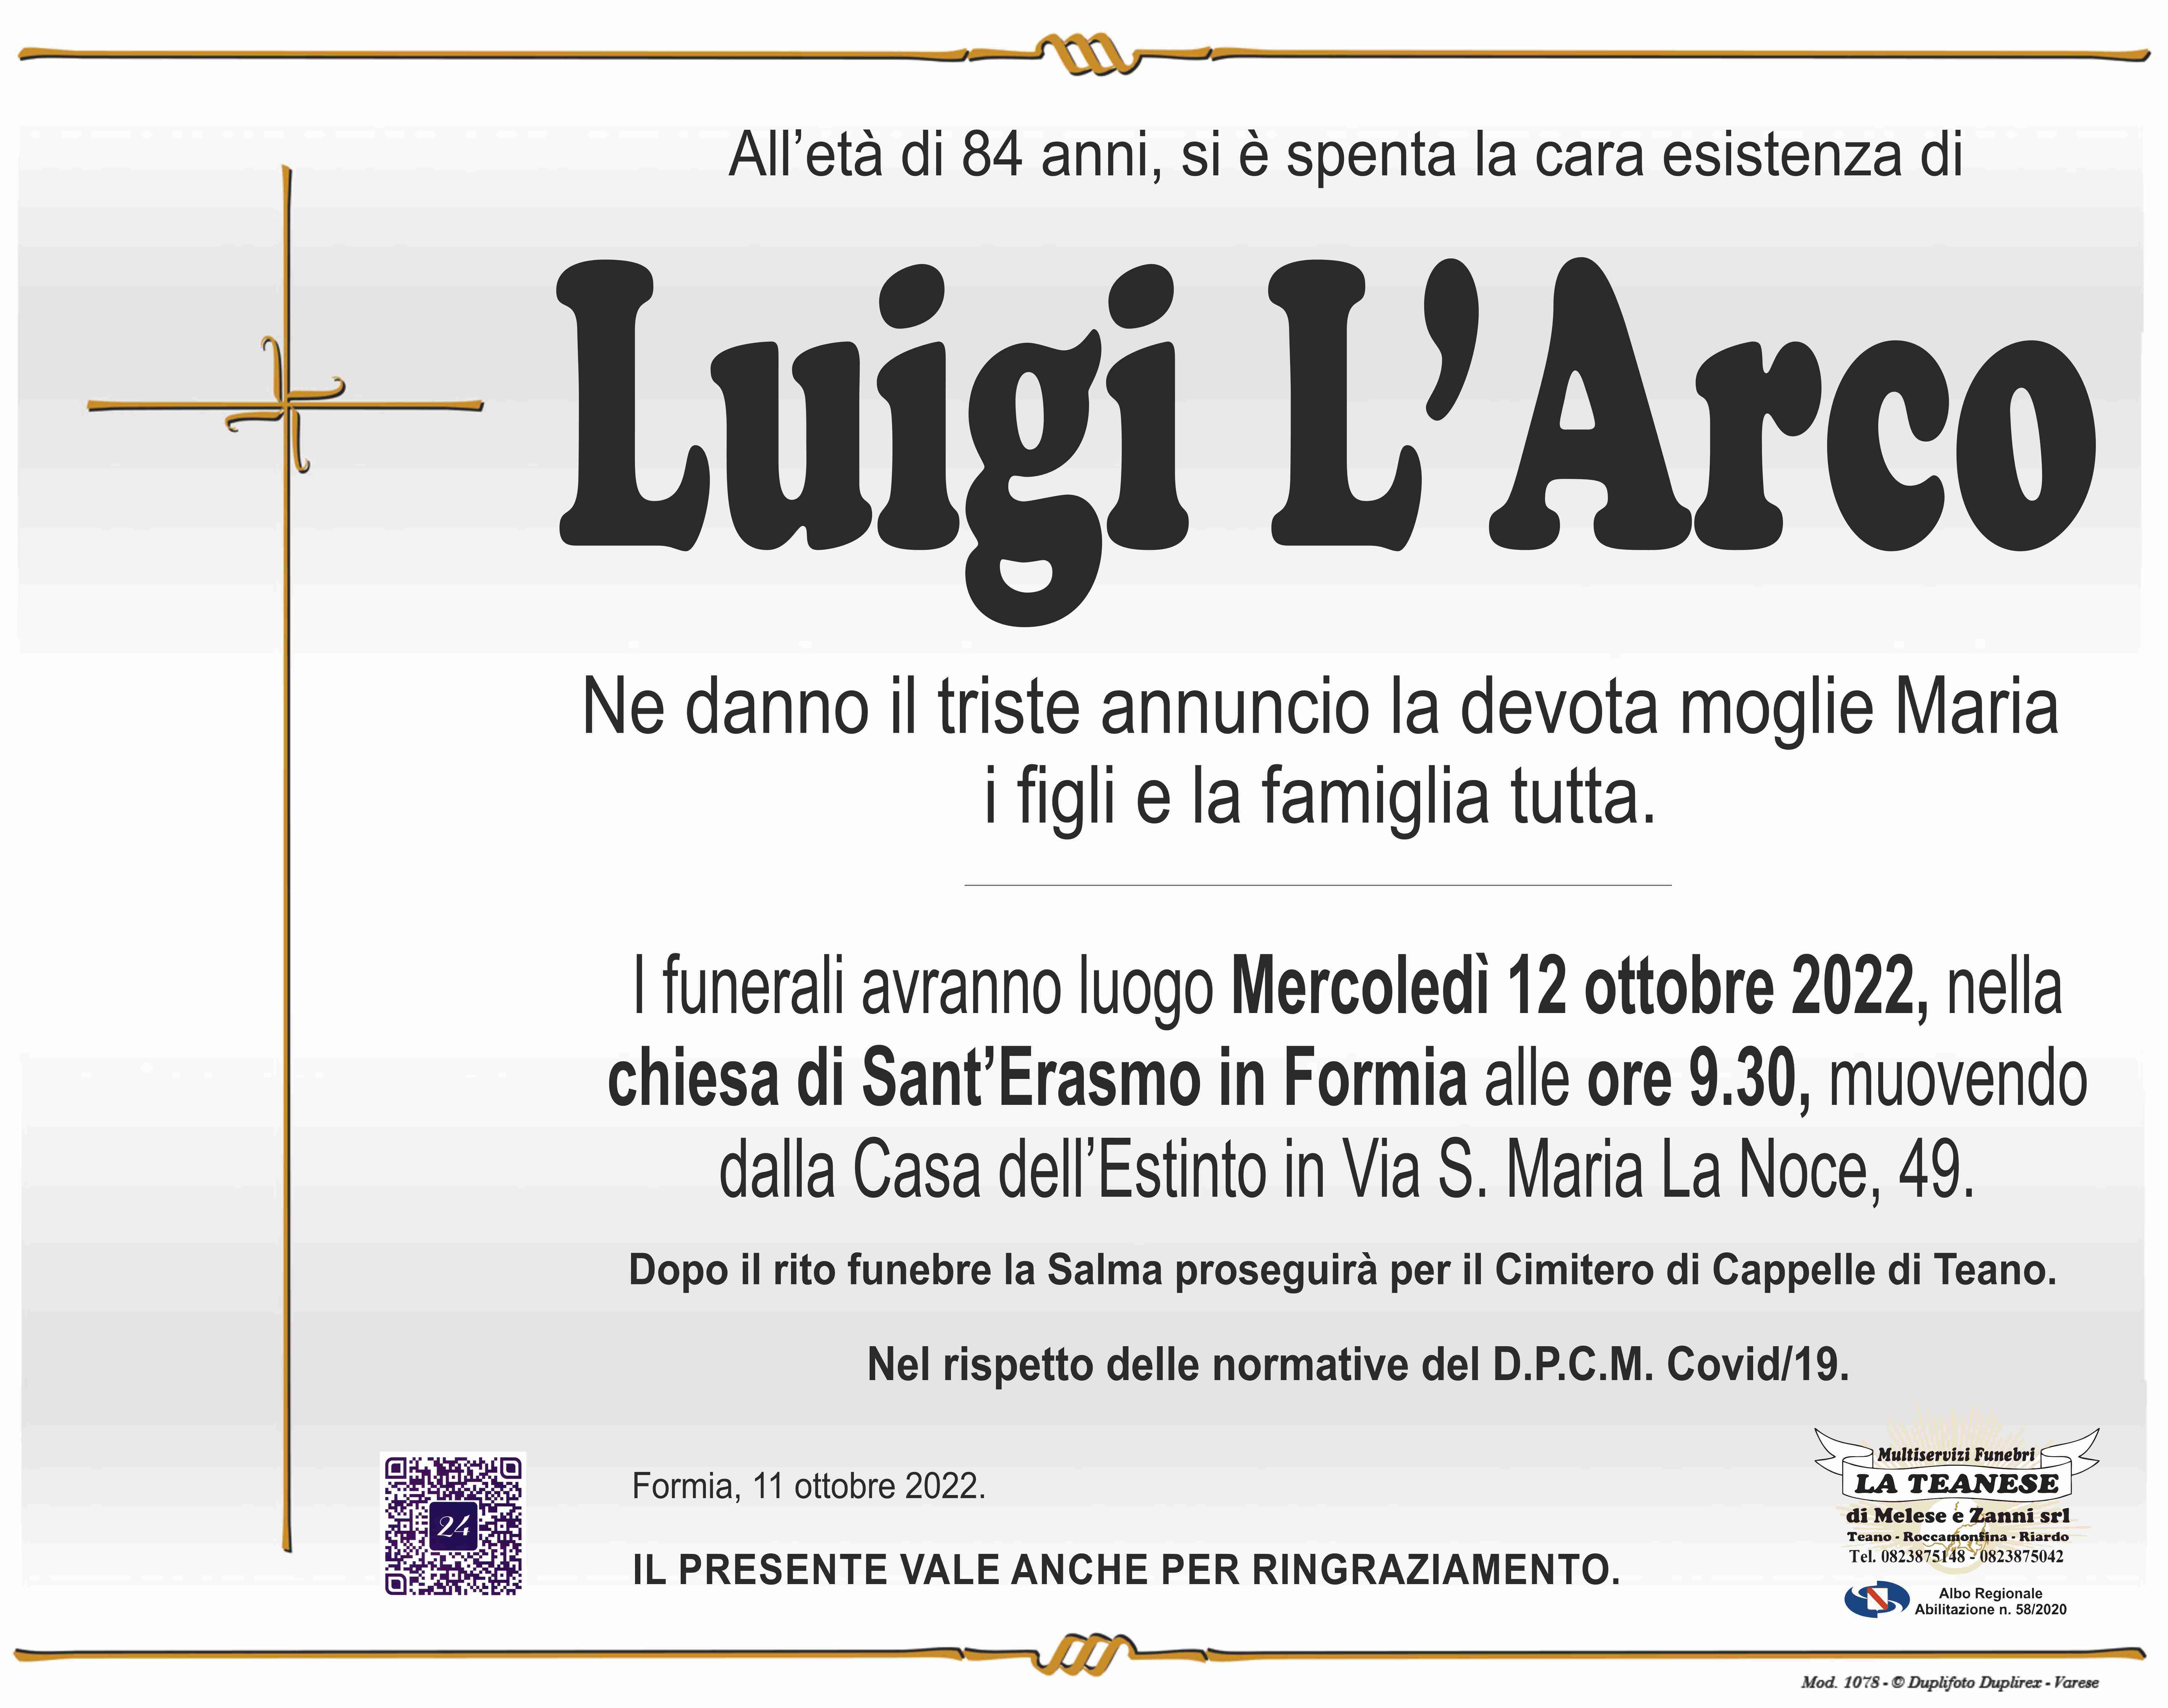 Luigi L'Arco